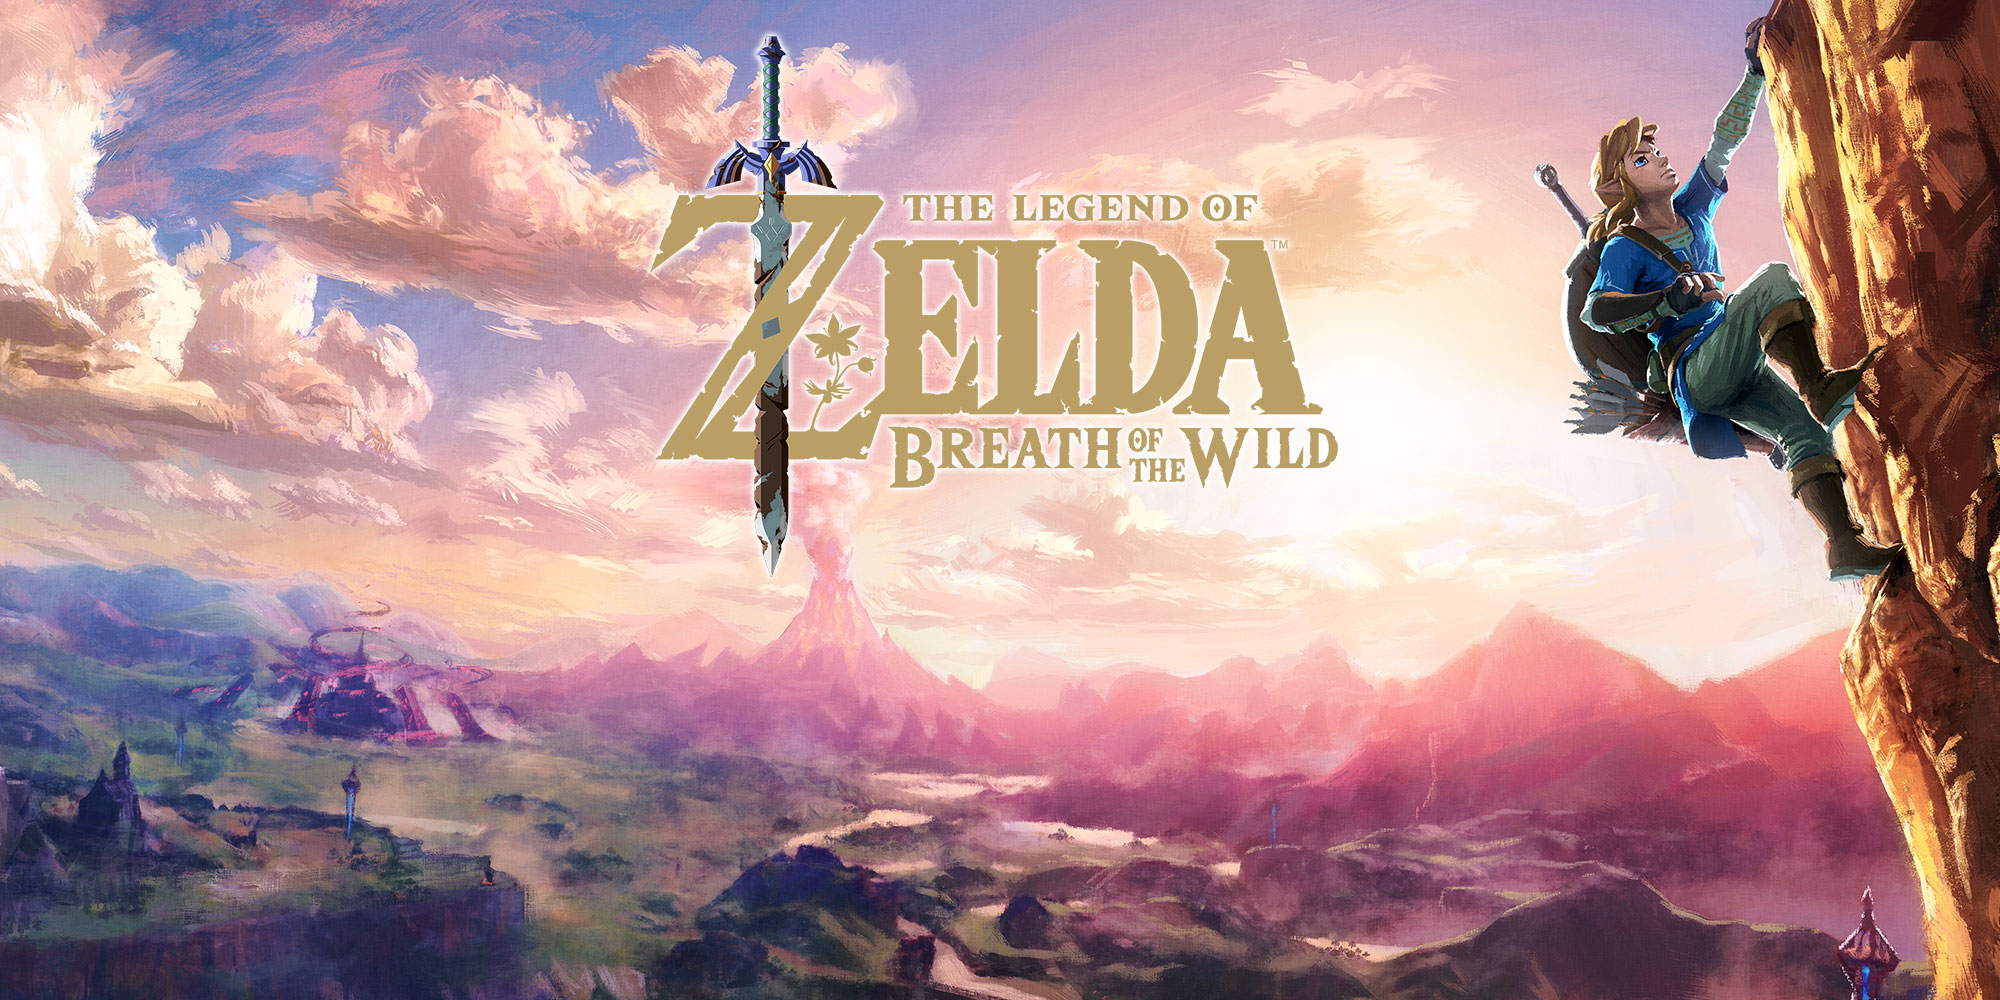 Go on an adventure with 33% off The Legend of Zelda: Link's Awakening